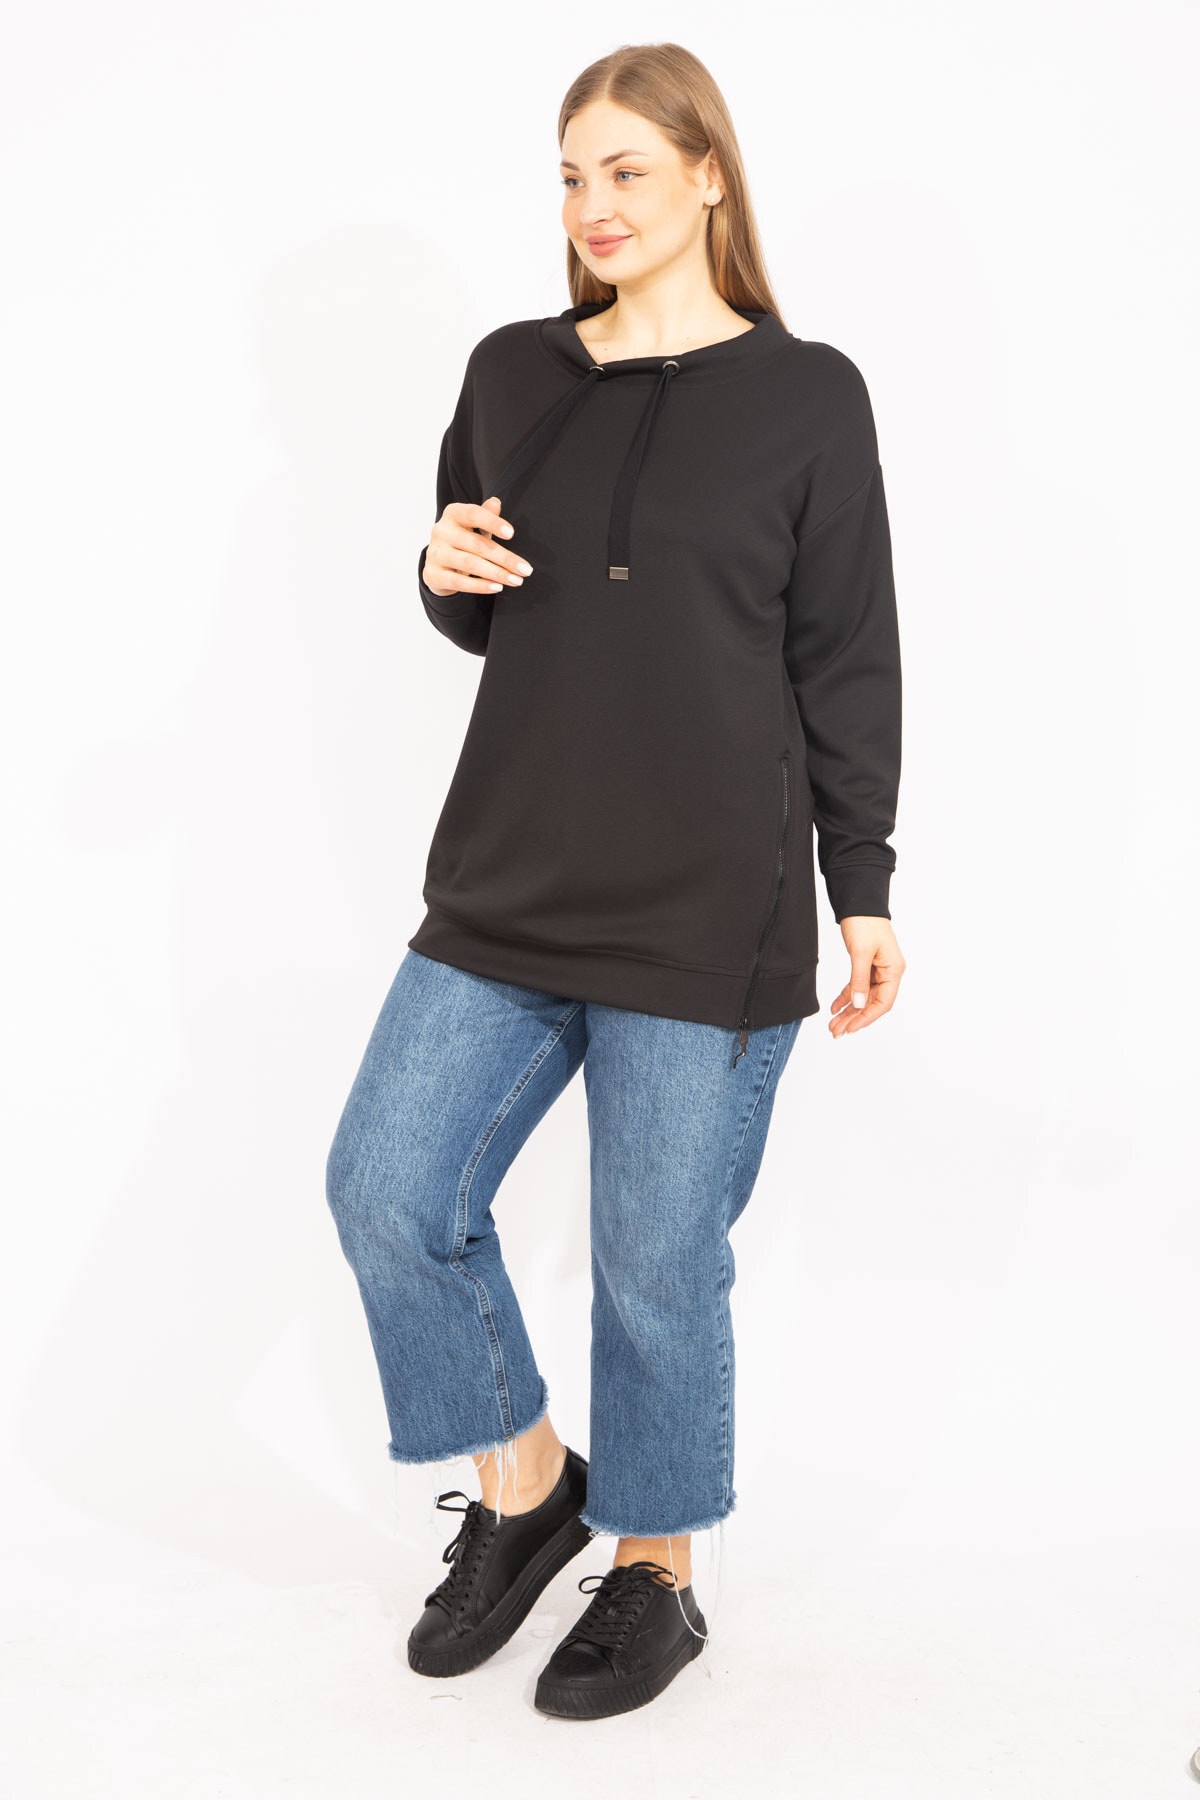 Şans Women's Black Plus Size Sweatshirt with Side Zipper Slits and Eyelets Detail